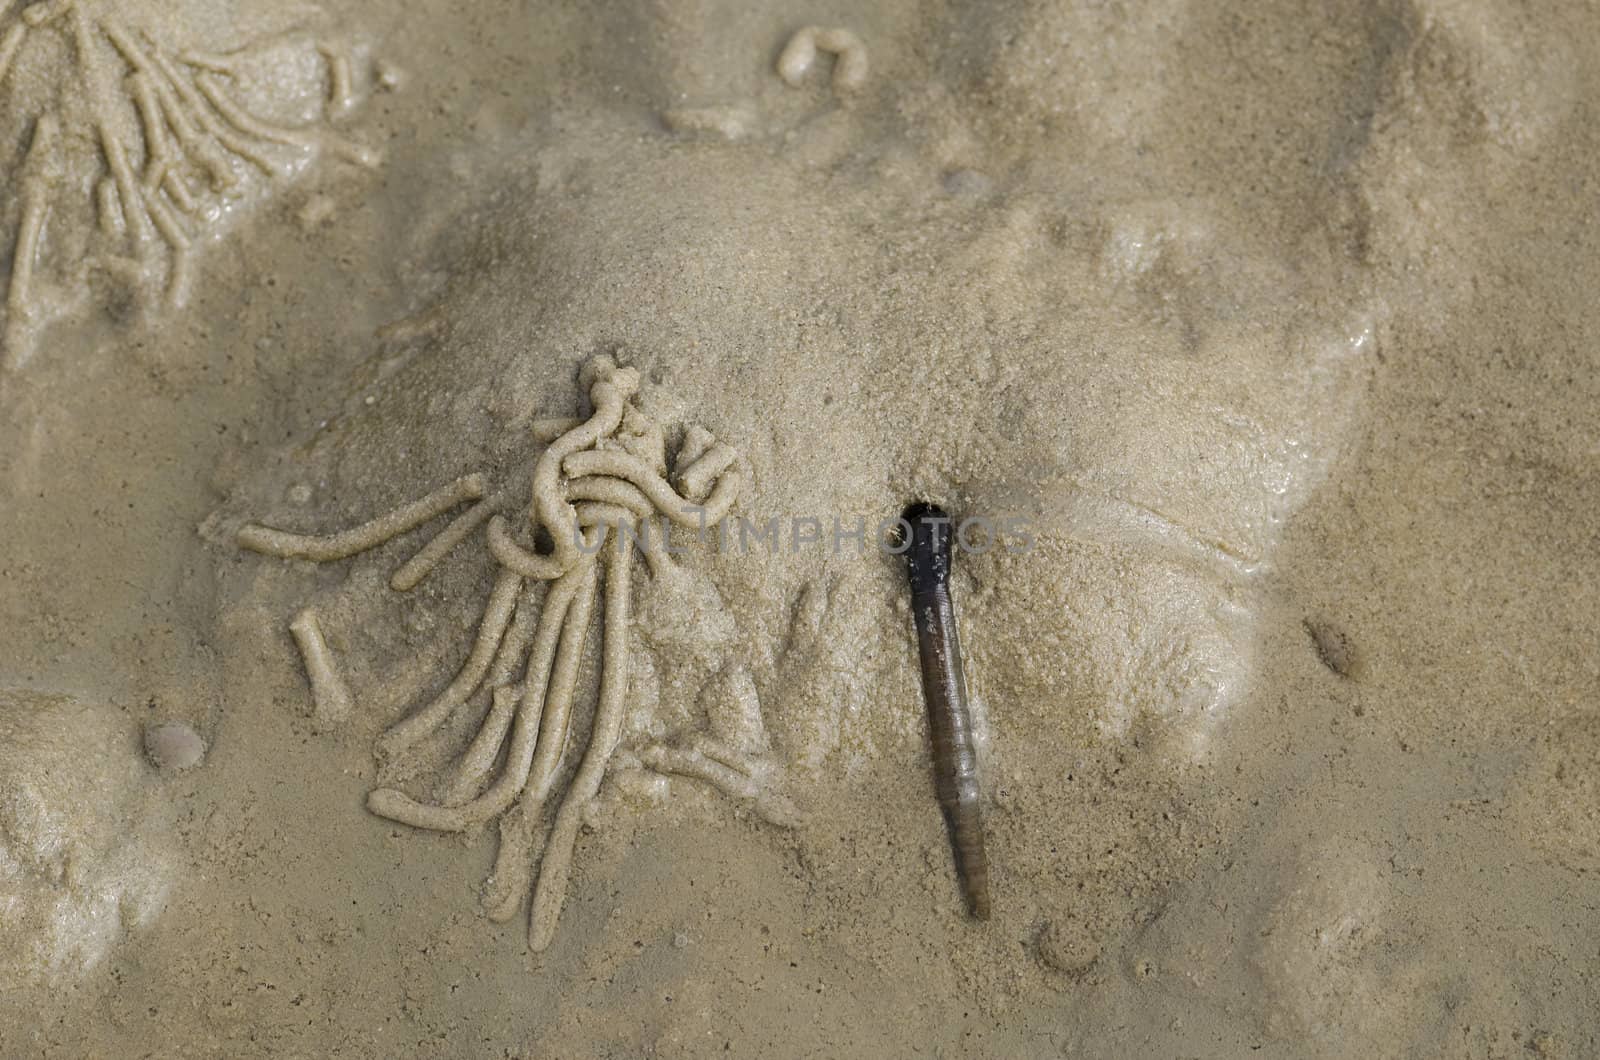 Lugworm or sandworm, Arenicola marina by Arrxxx